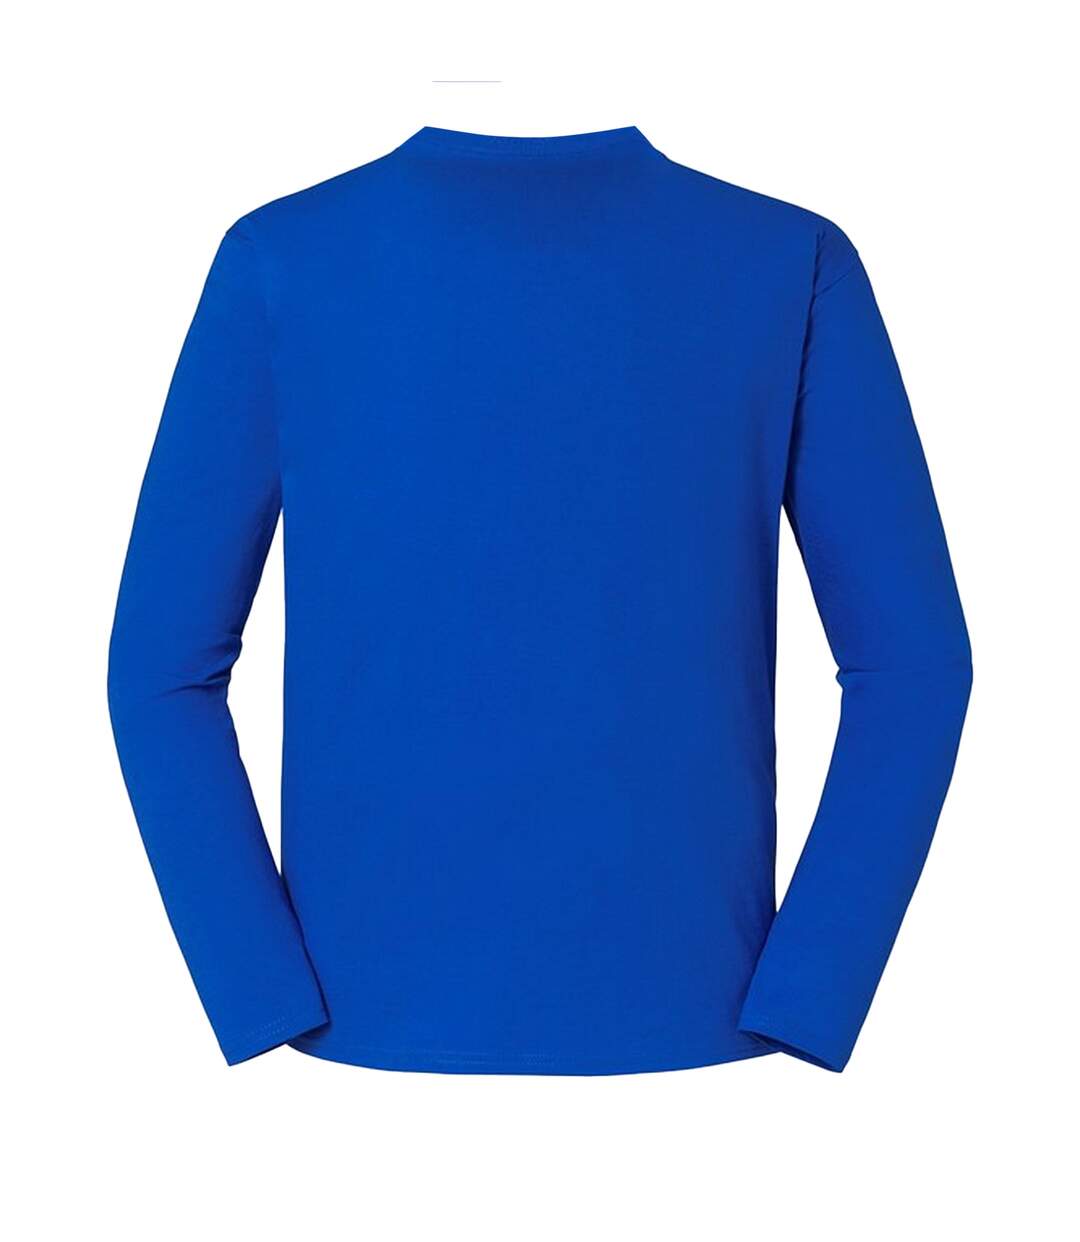 Fruit of the Loom Mens Iconic 195 Premium Ringspun Cotton Long-Sleeved T-Shirt (Royal Blue)